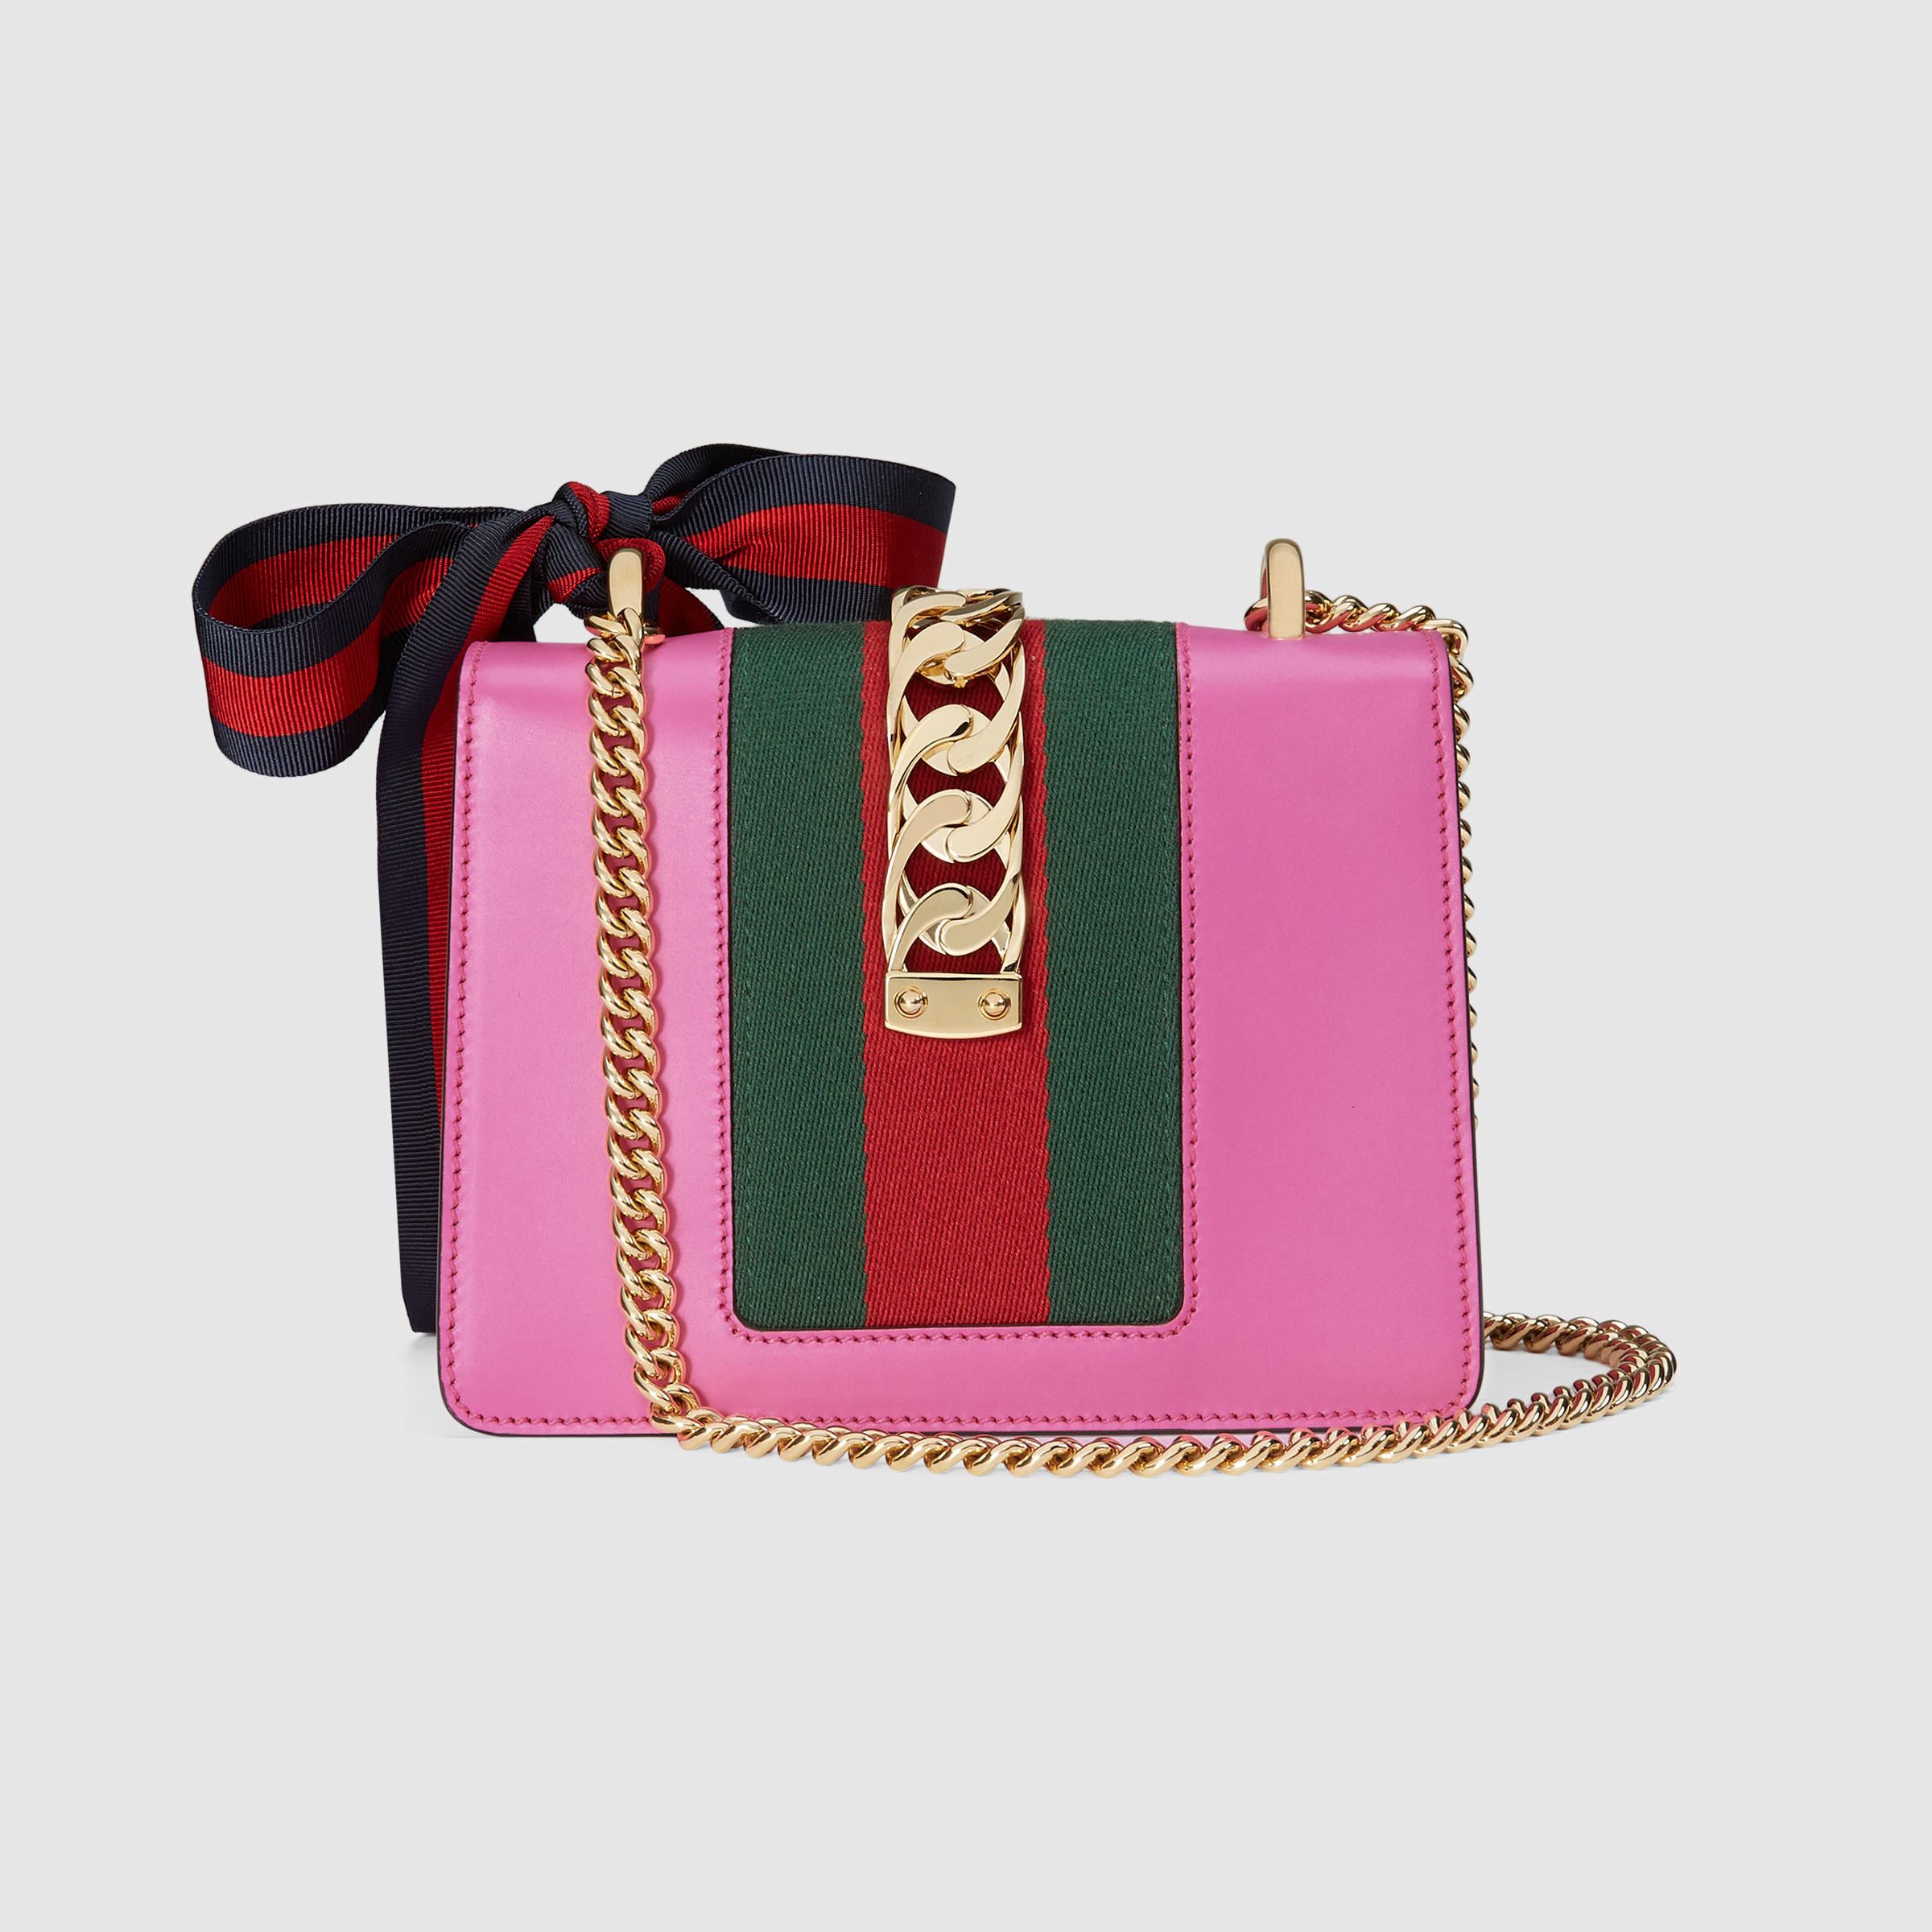 Lyst - Gucci Sylvie Leather Mini Chain Bag